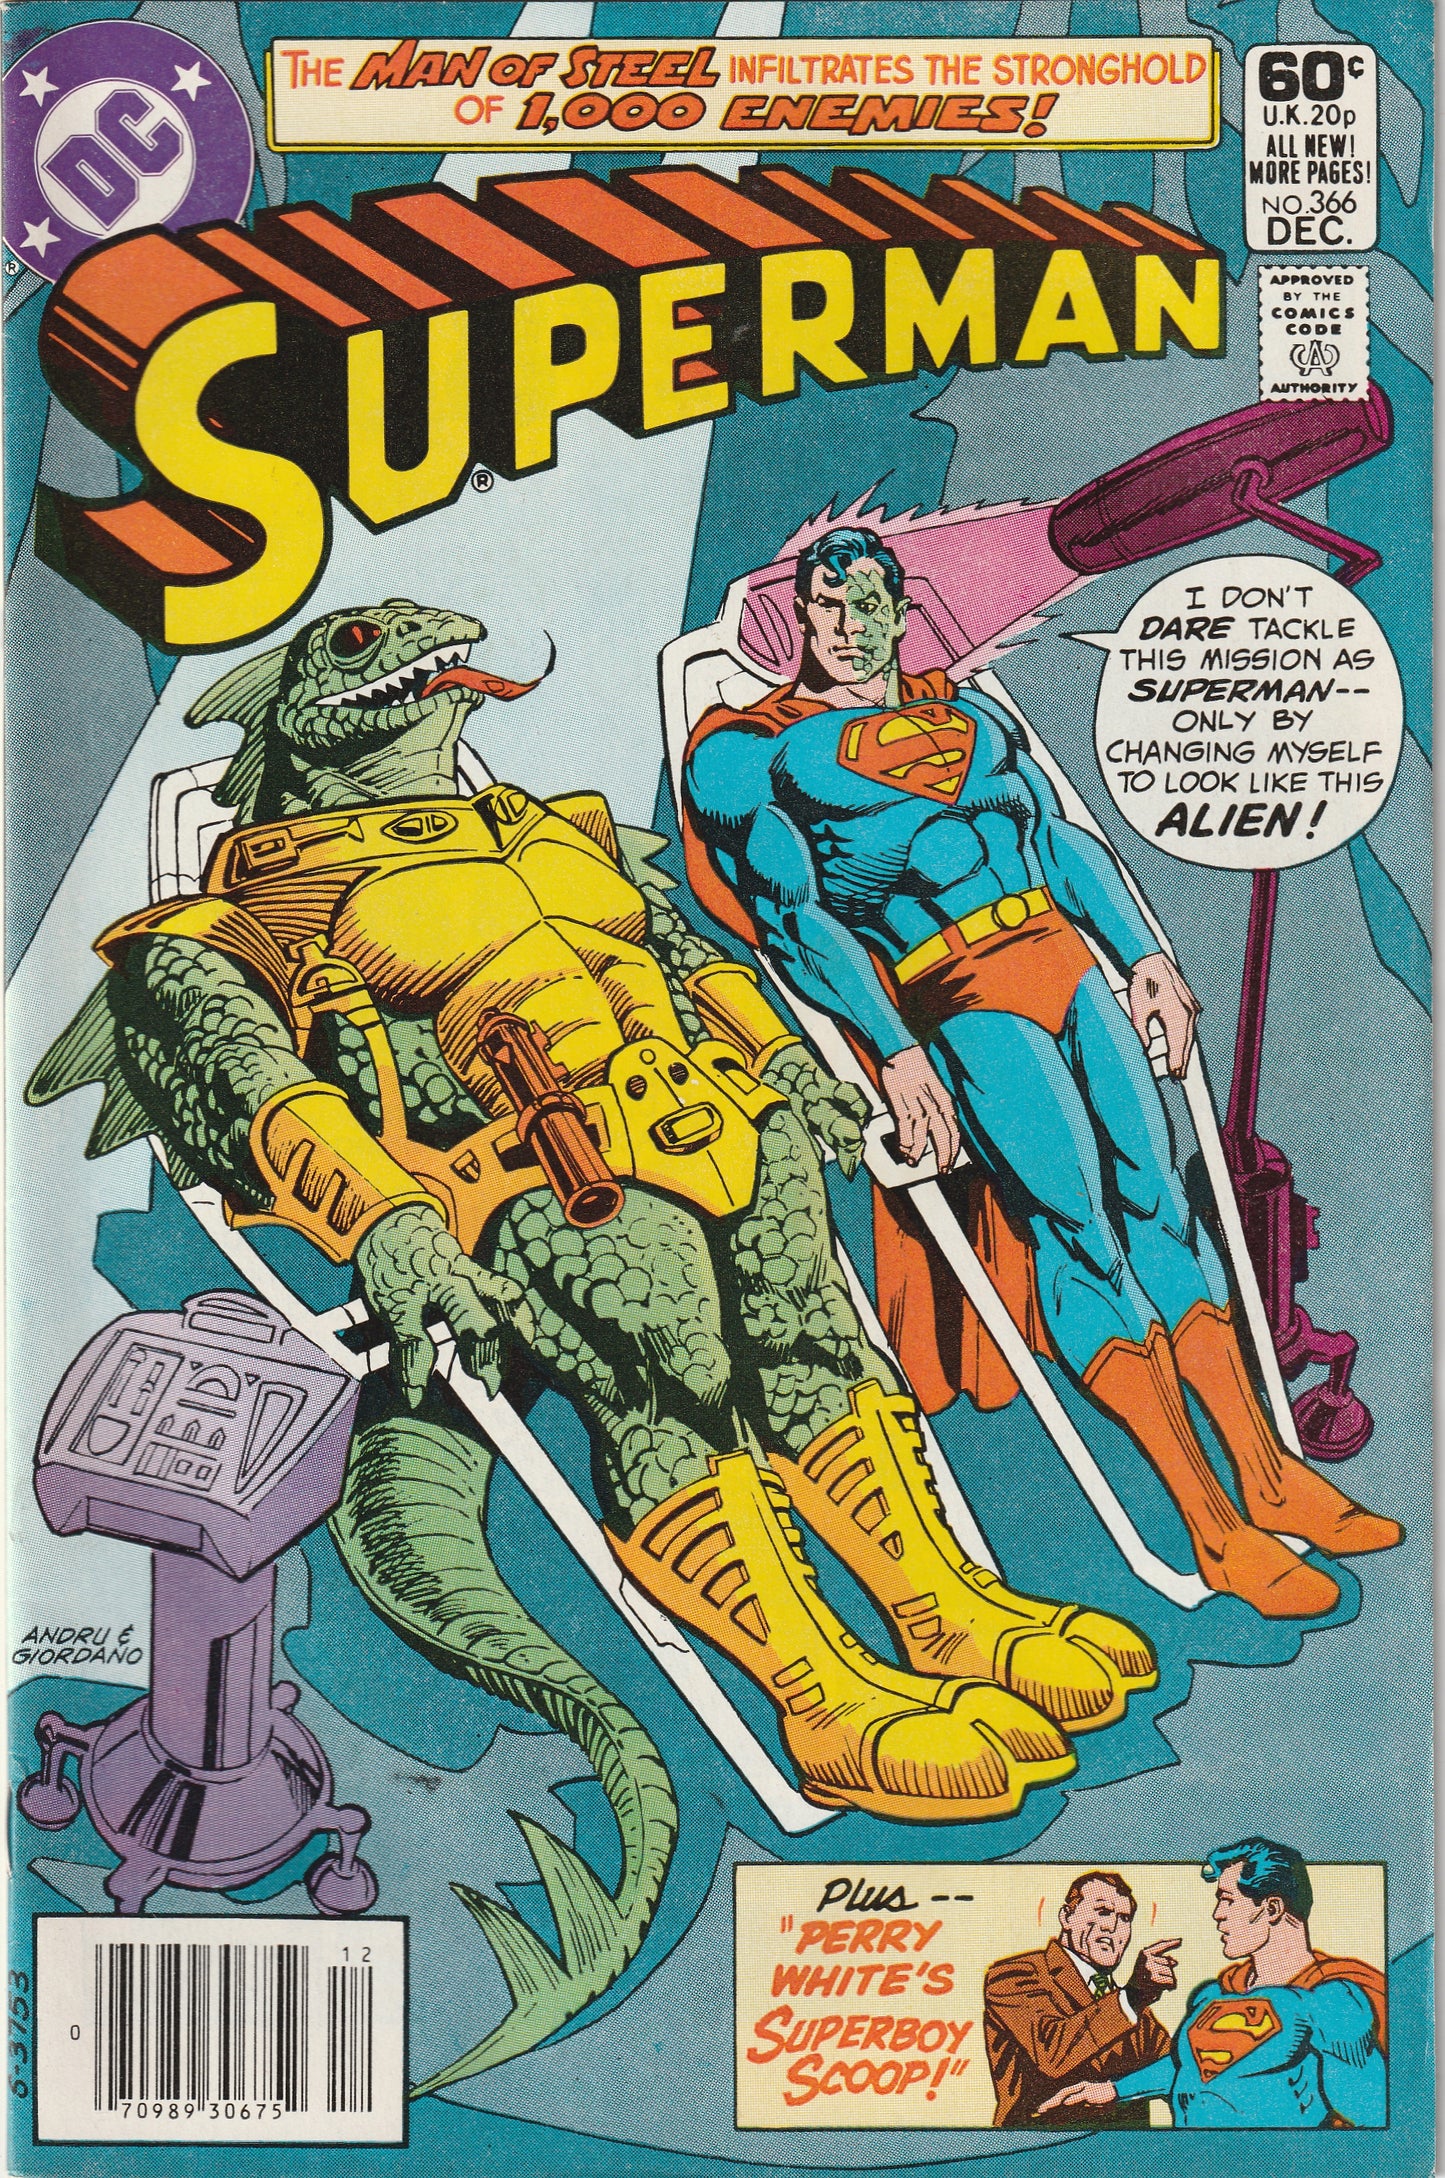 Superman #366 (1981) - Fan letter from Todd McFarlane